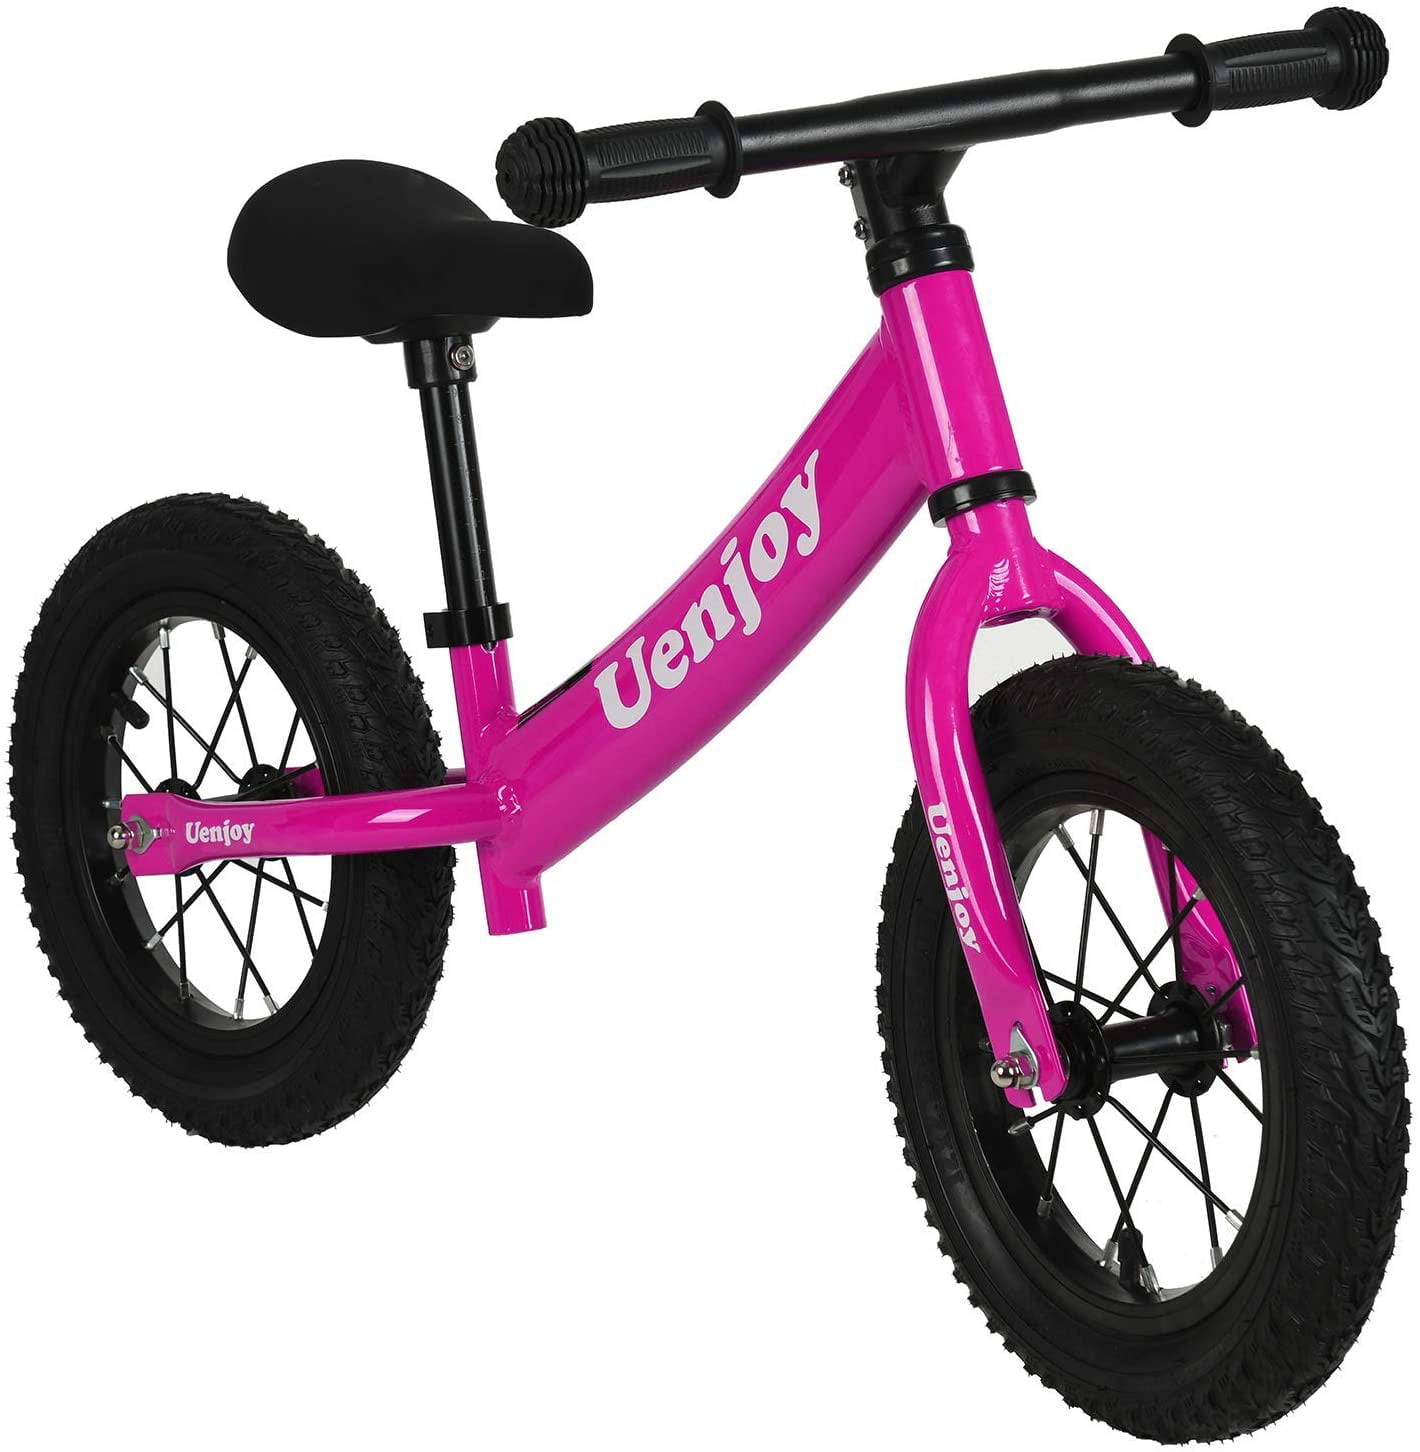 Uenjoy Kids Balance Bike Pink No-Pedal Child Training Bicycle w/Adjustable Seat 